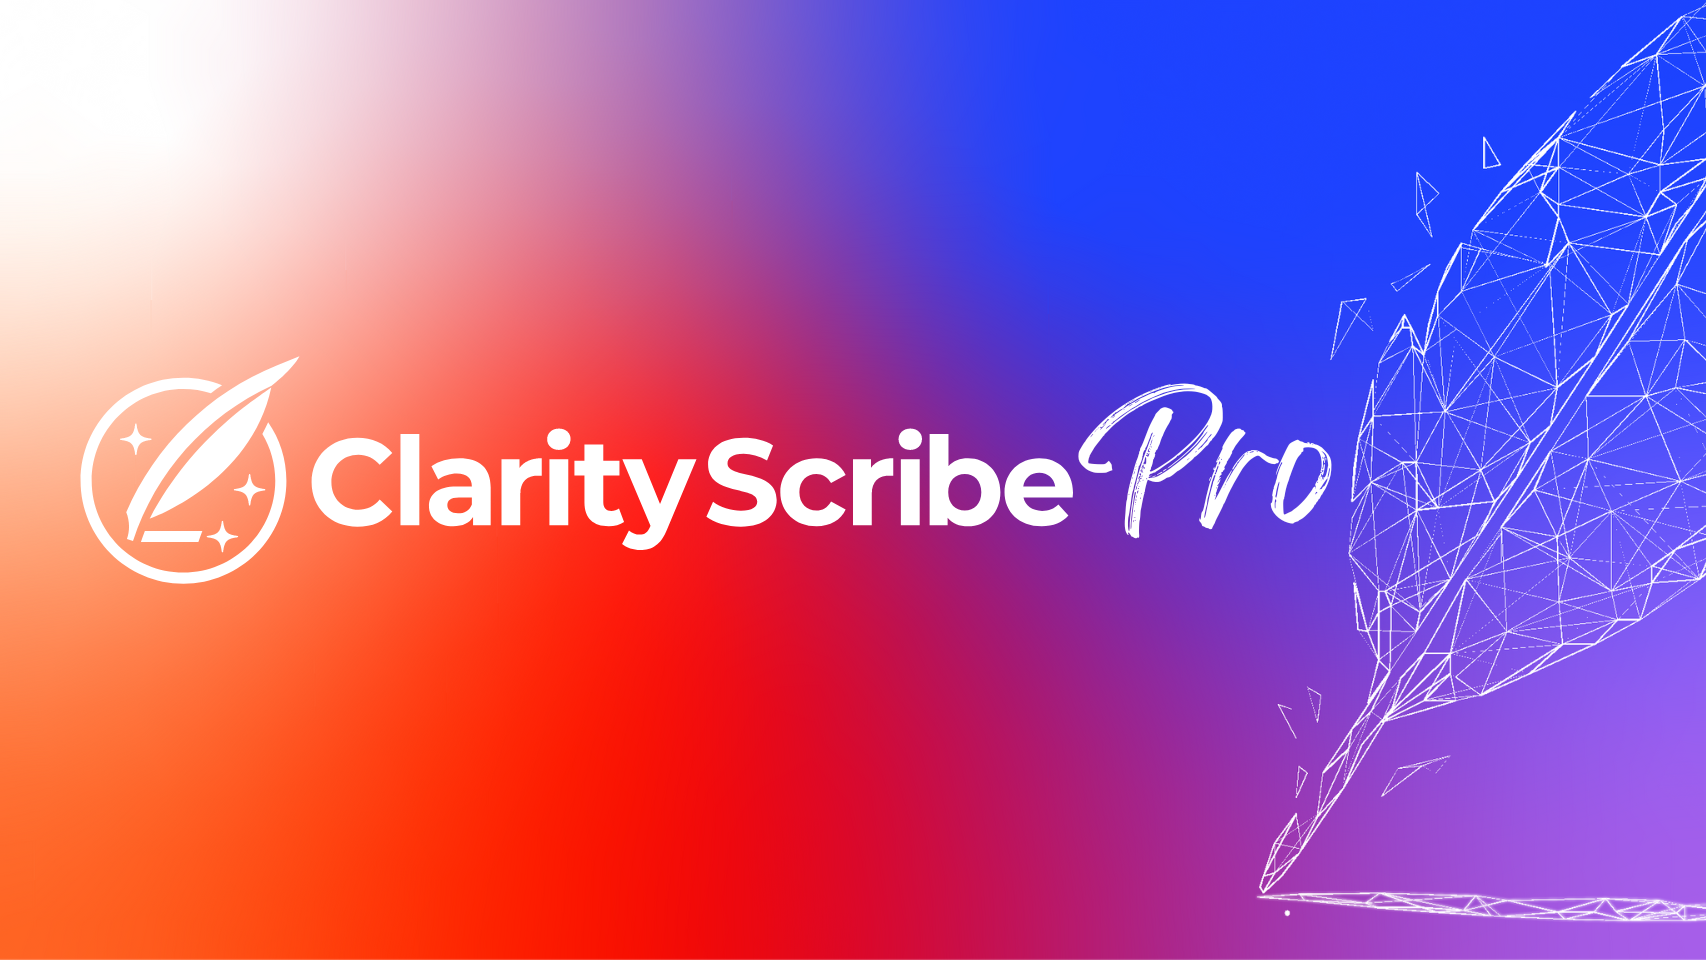 Clarity Scribe Pro